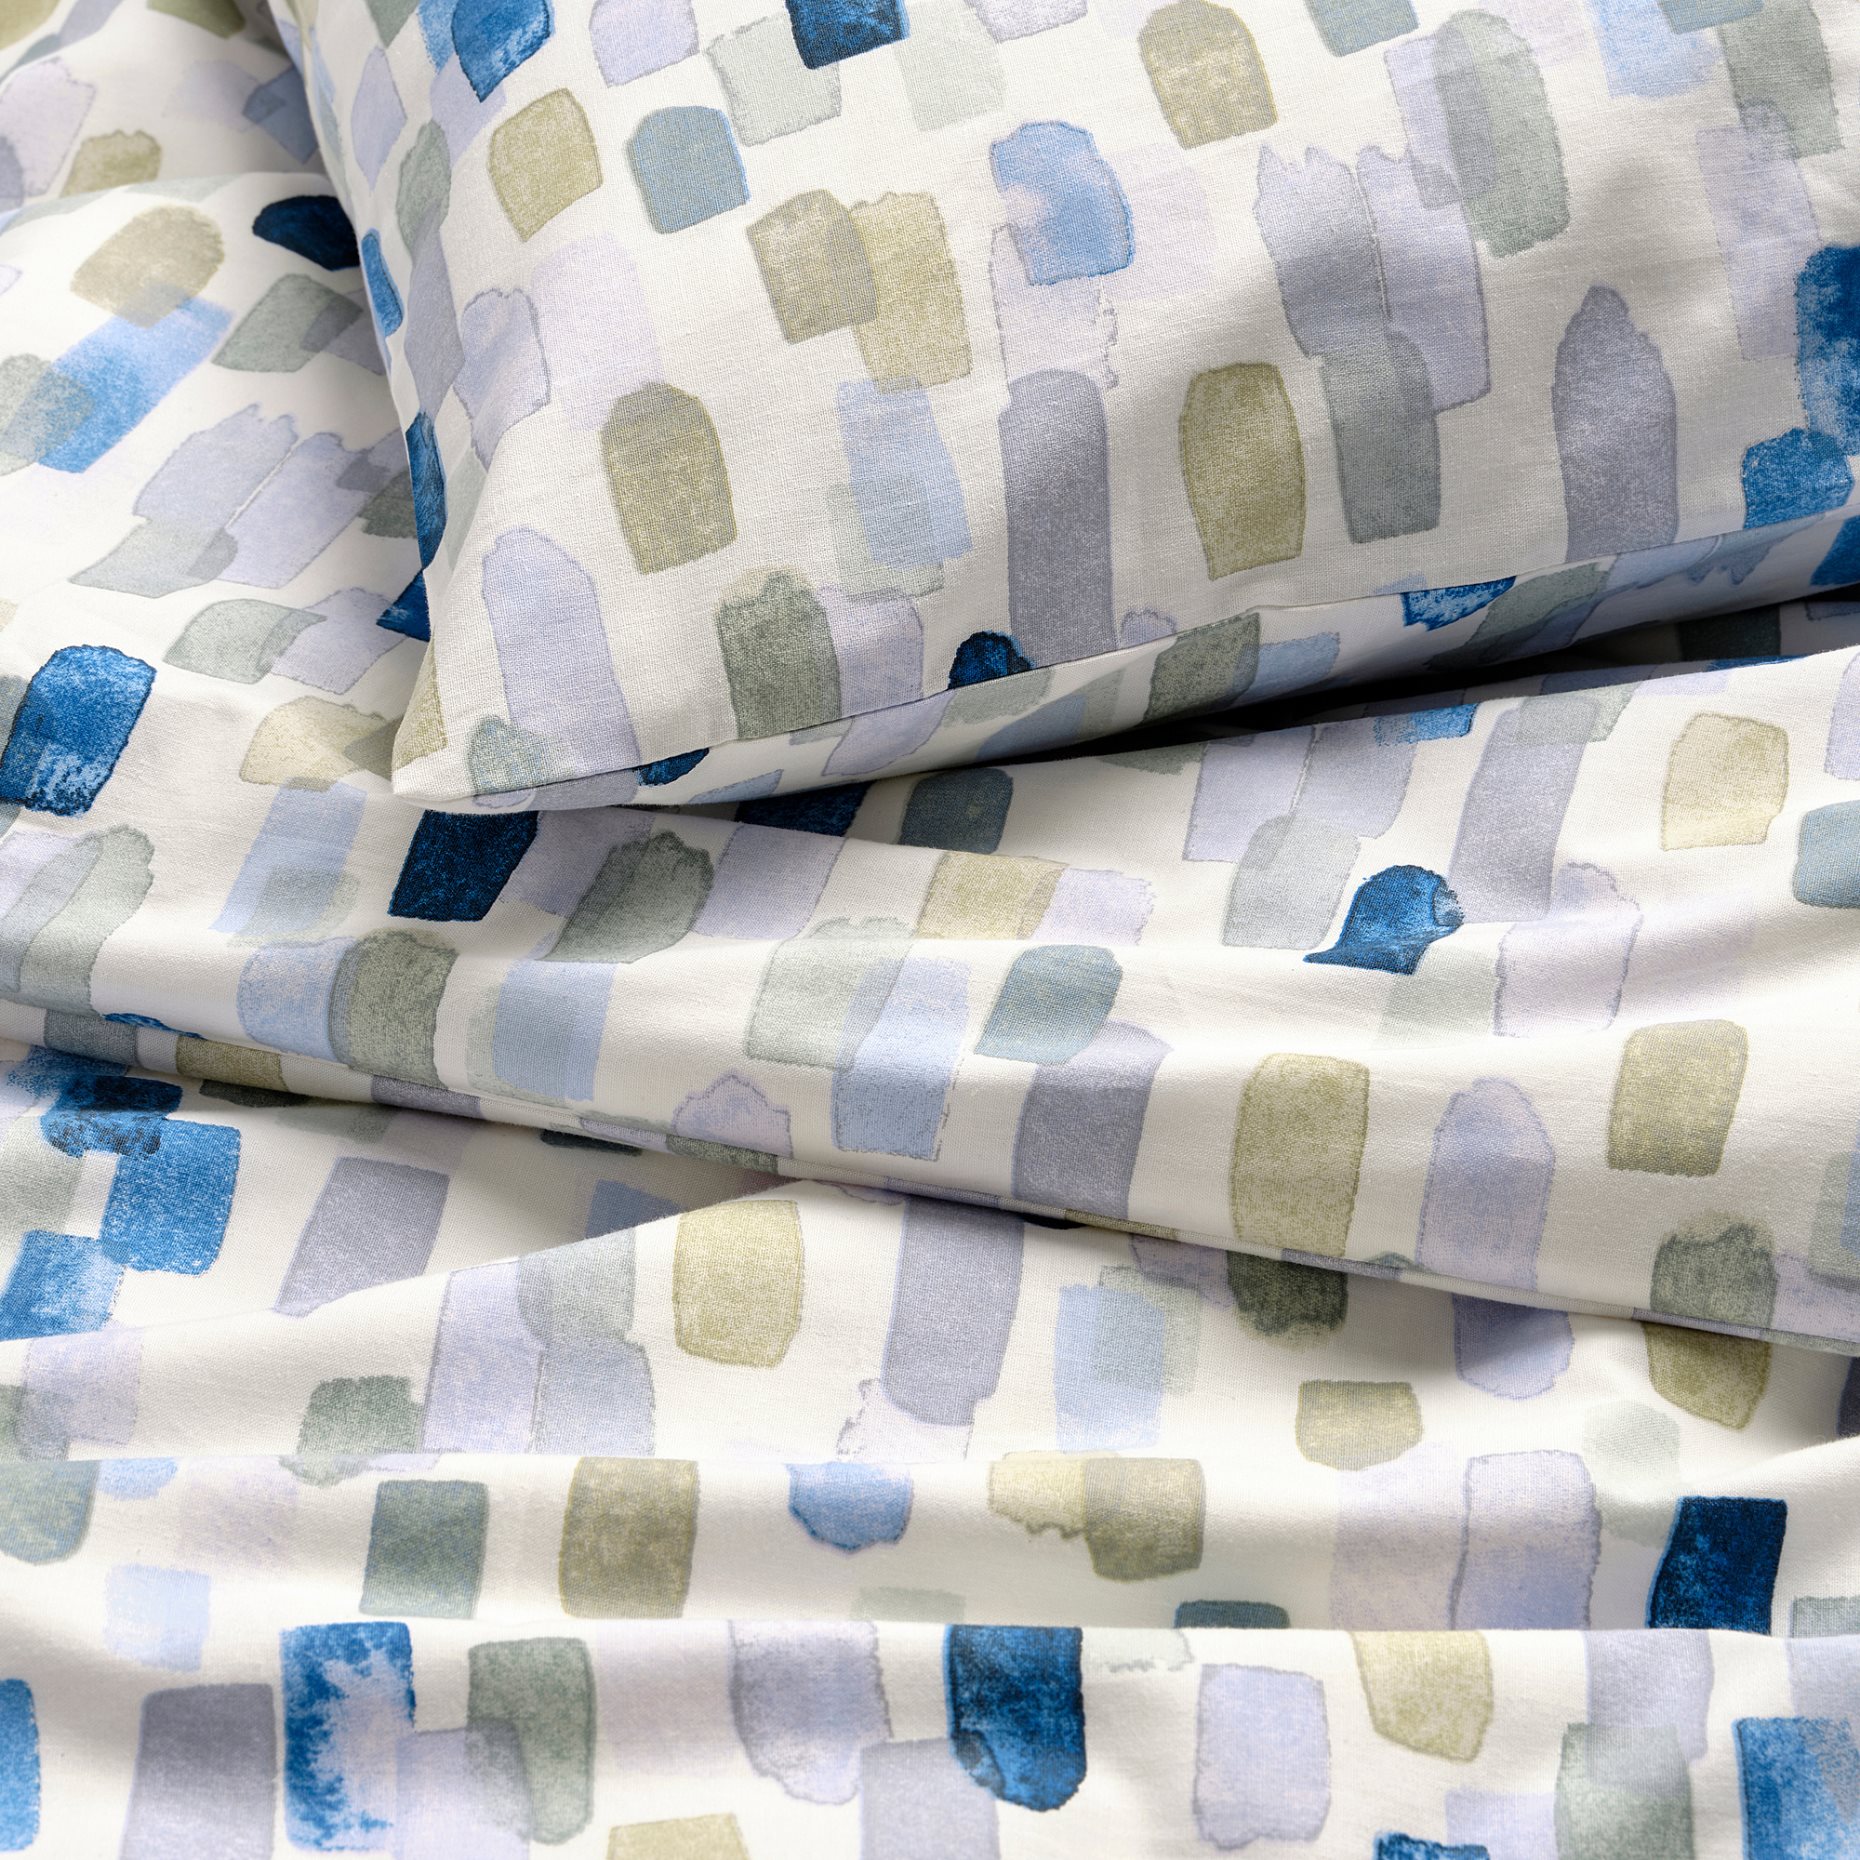 VINTERIBERIS, duvet cover and 2 pillowcases, 240x220/50x60 cm, 105.467.74